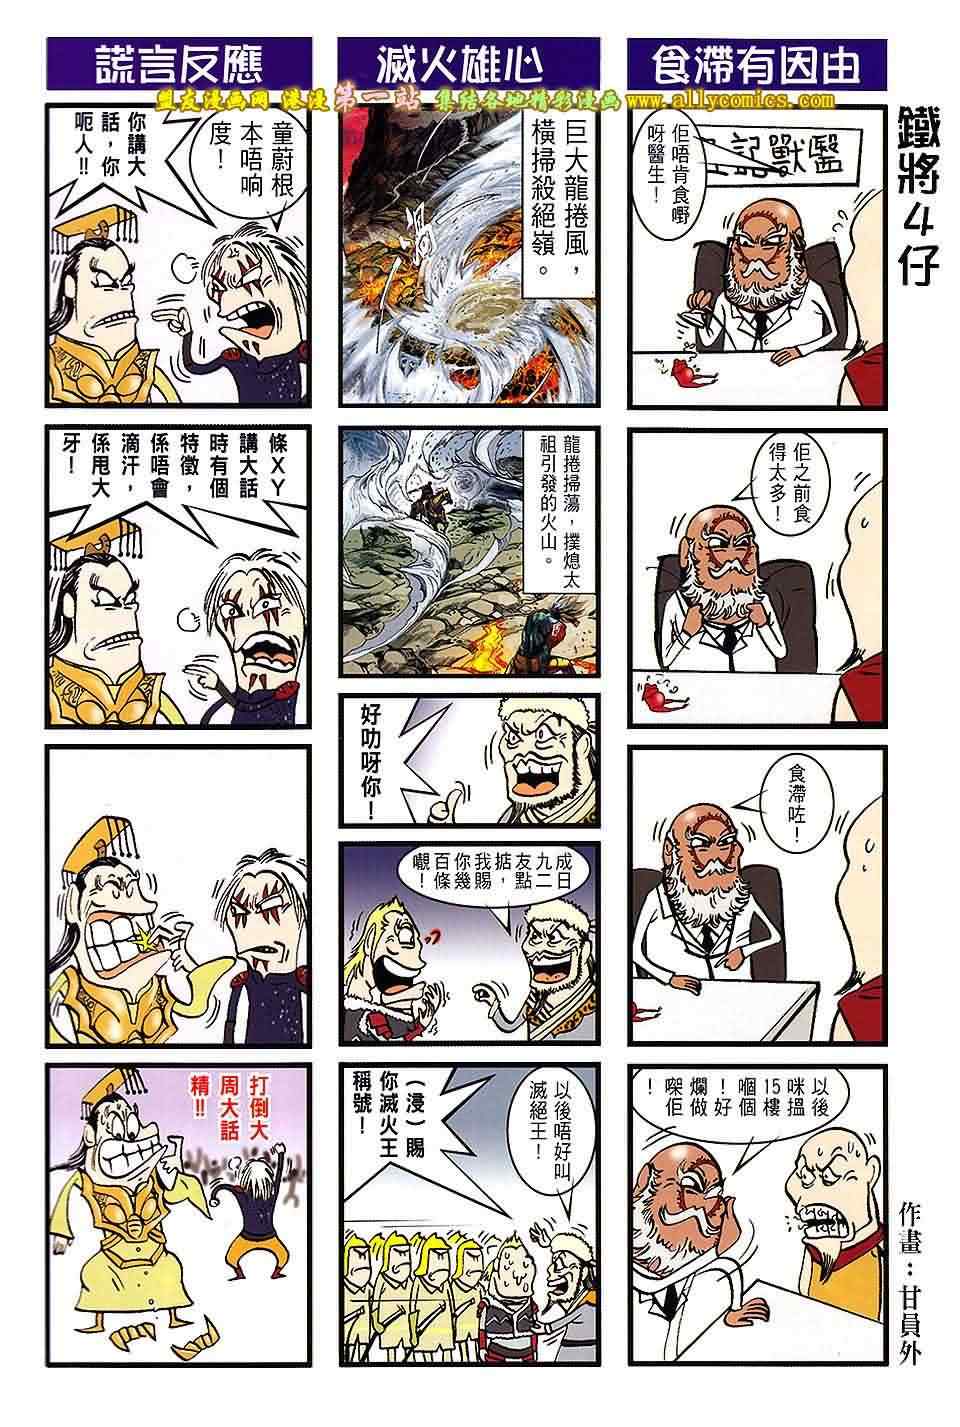 《铁将纵横2012》漫画 铁将纵横 47卷